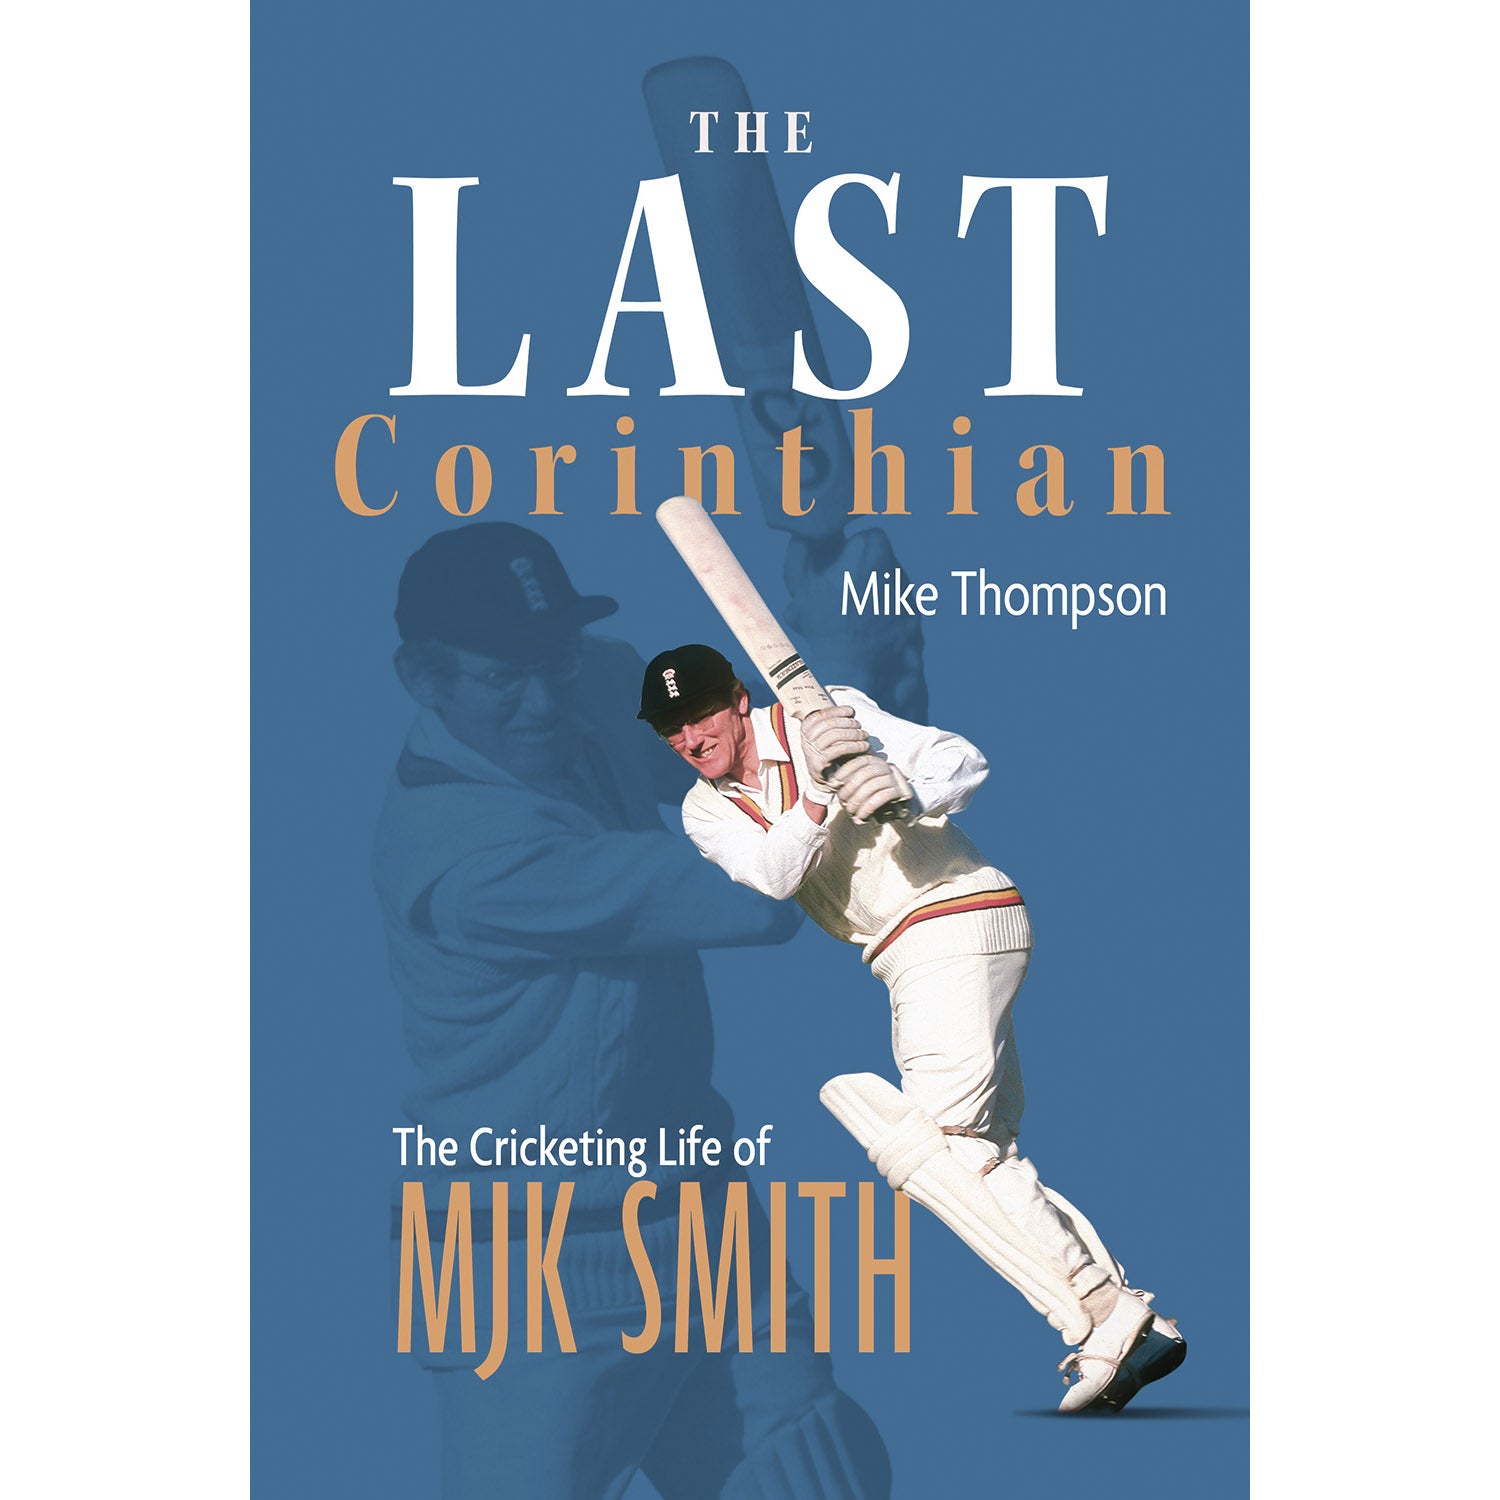 The Last Corinthian – The Cricketing Life of M.J.K. Smith